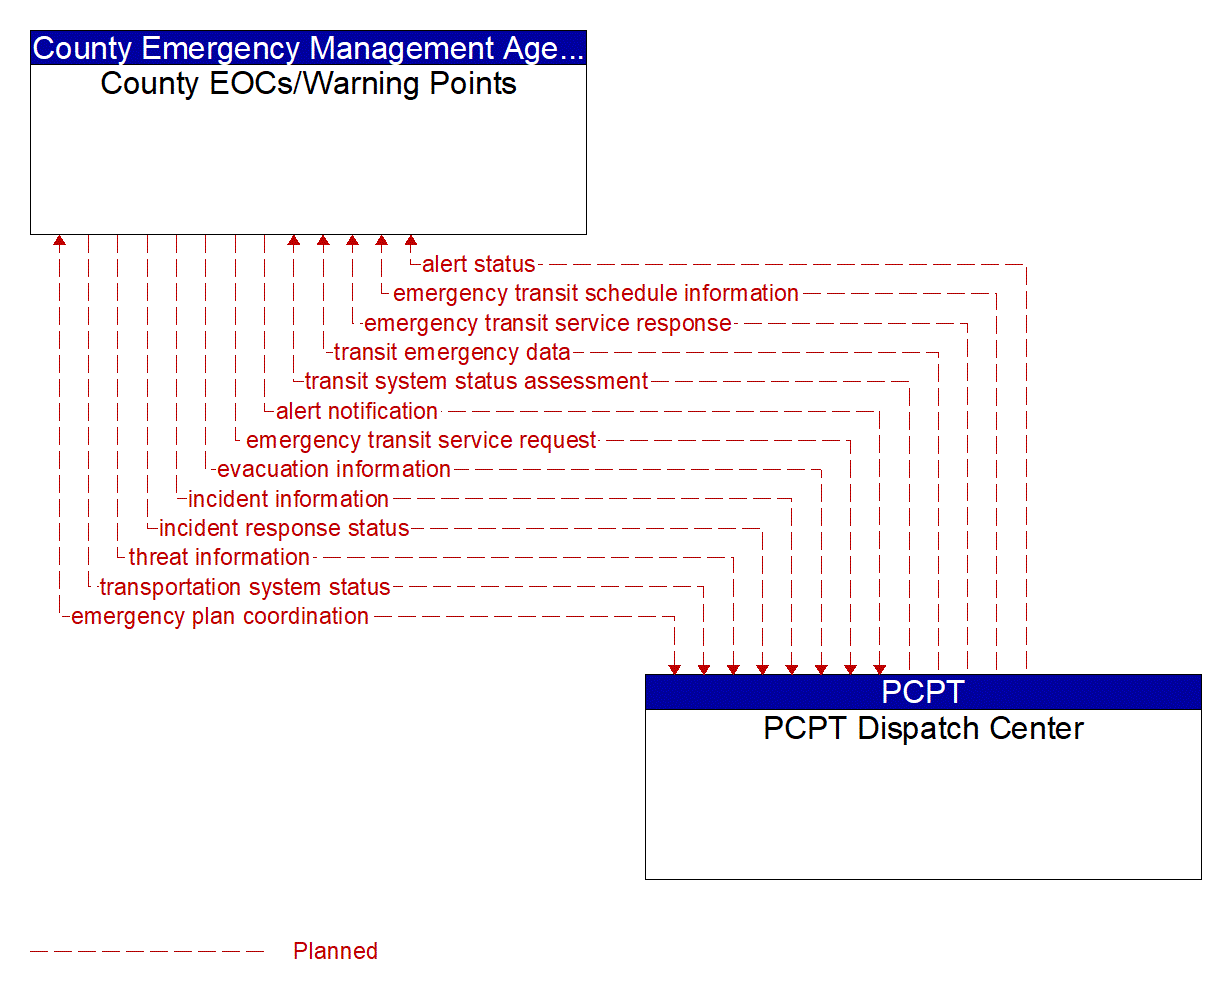 Architecture Flow Diagram: PCPT Dispatch Center <--> County EOCs/Warning Points